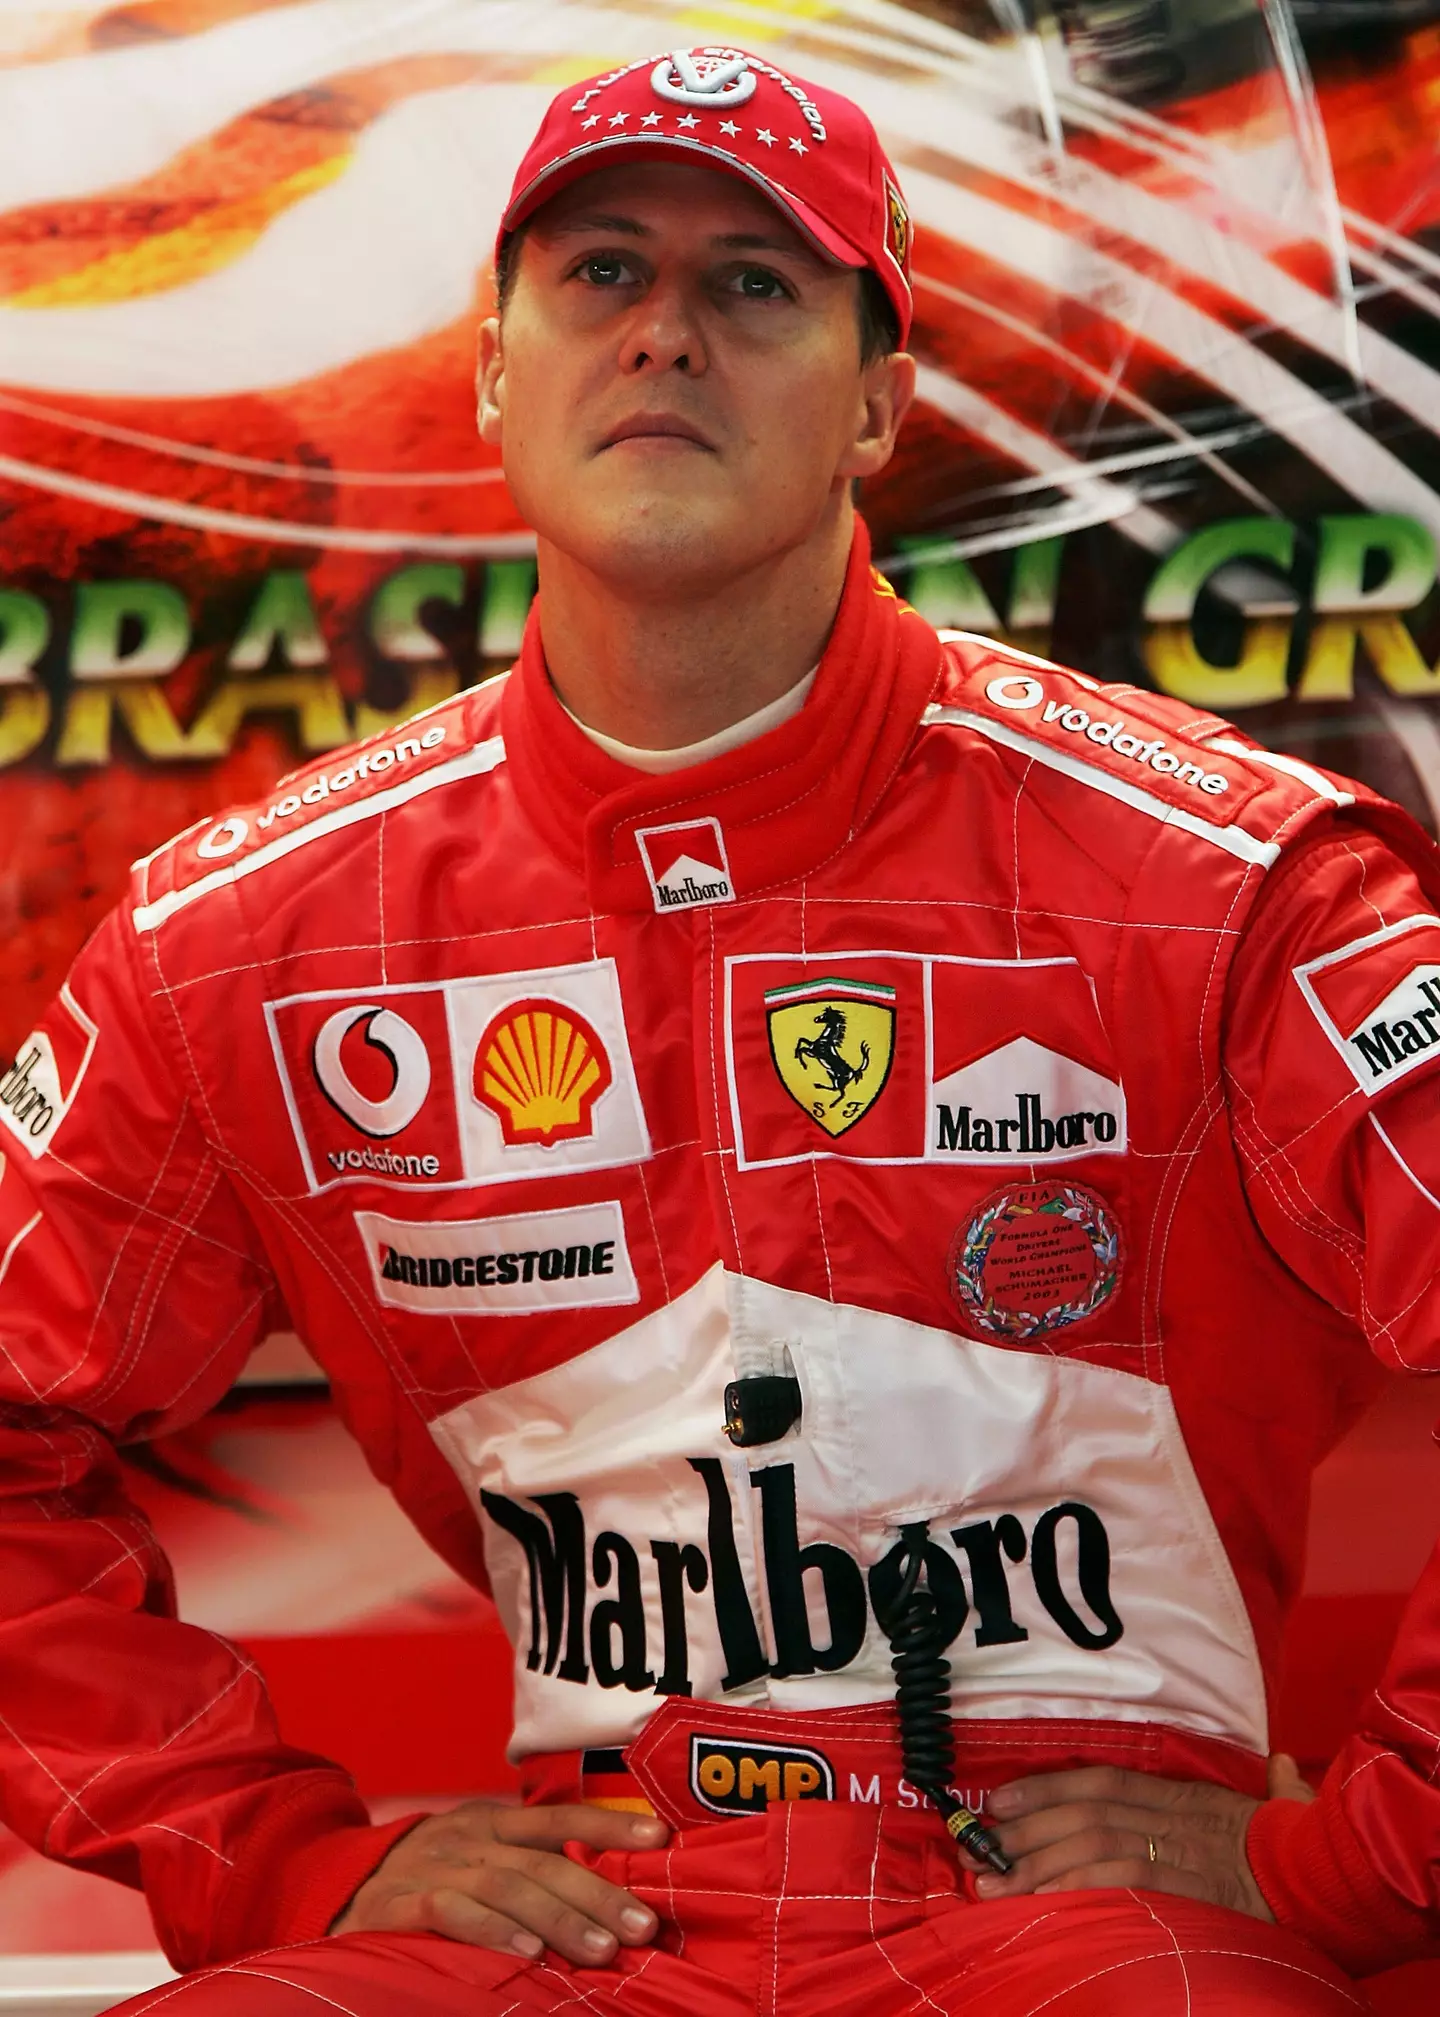 Michael Schumacher spent 250 days in a coma.